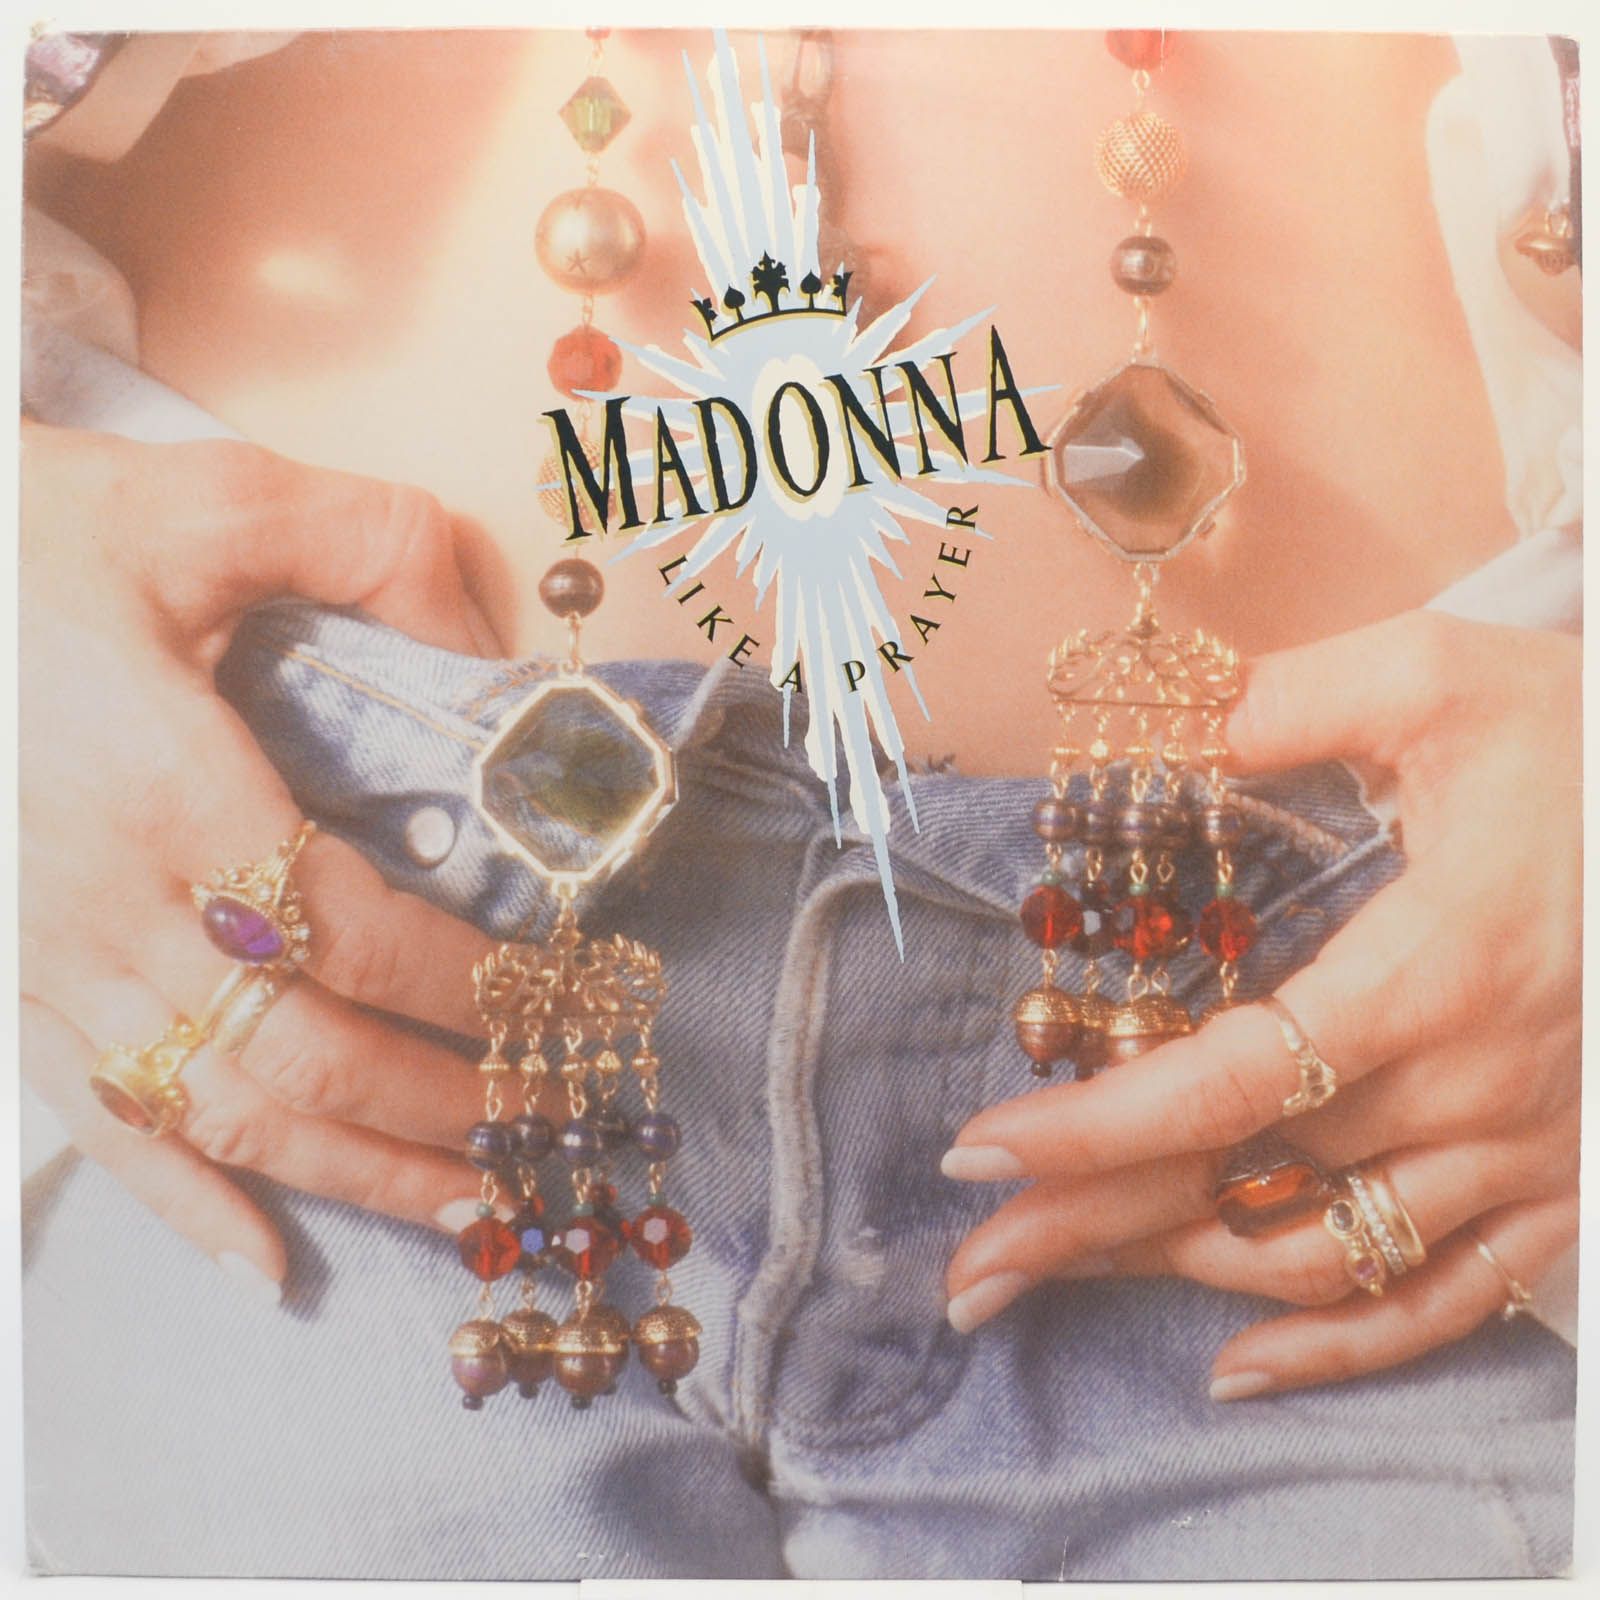 Madonna — Like A Prayer, 1989